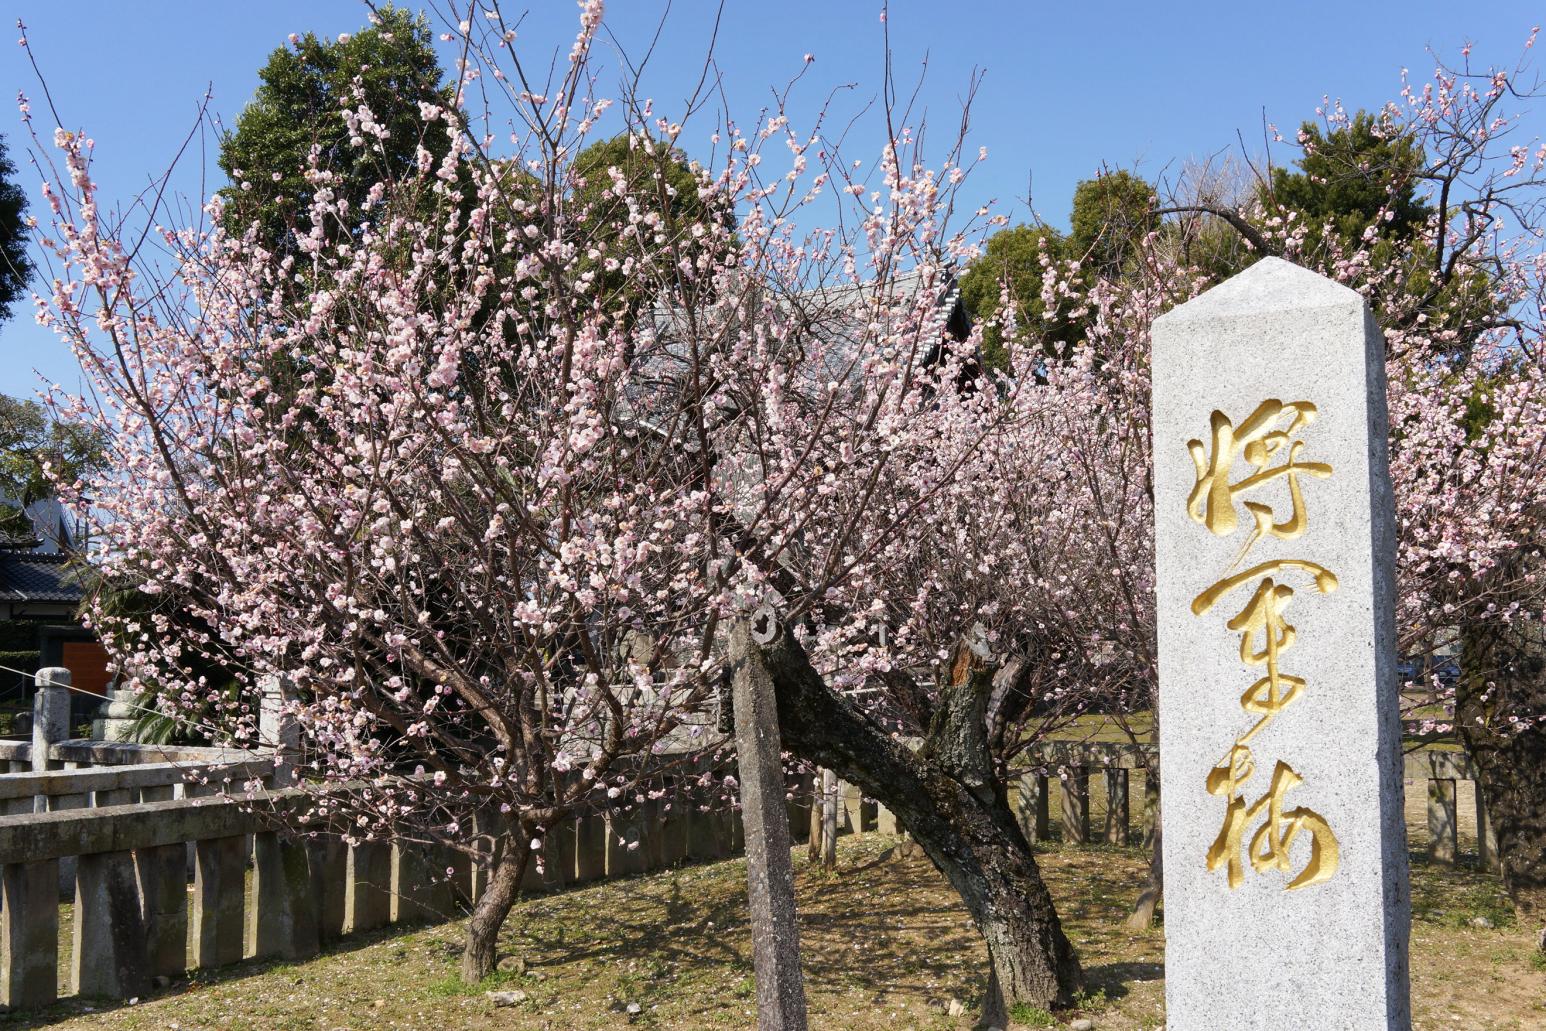 “Shogun” Plum Blossom Festival at Miyanojin Shrine-1